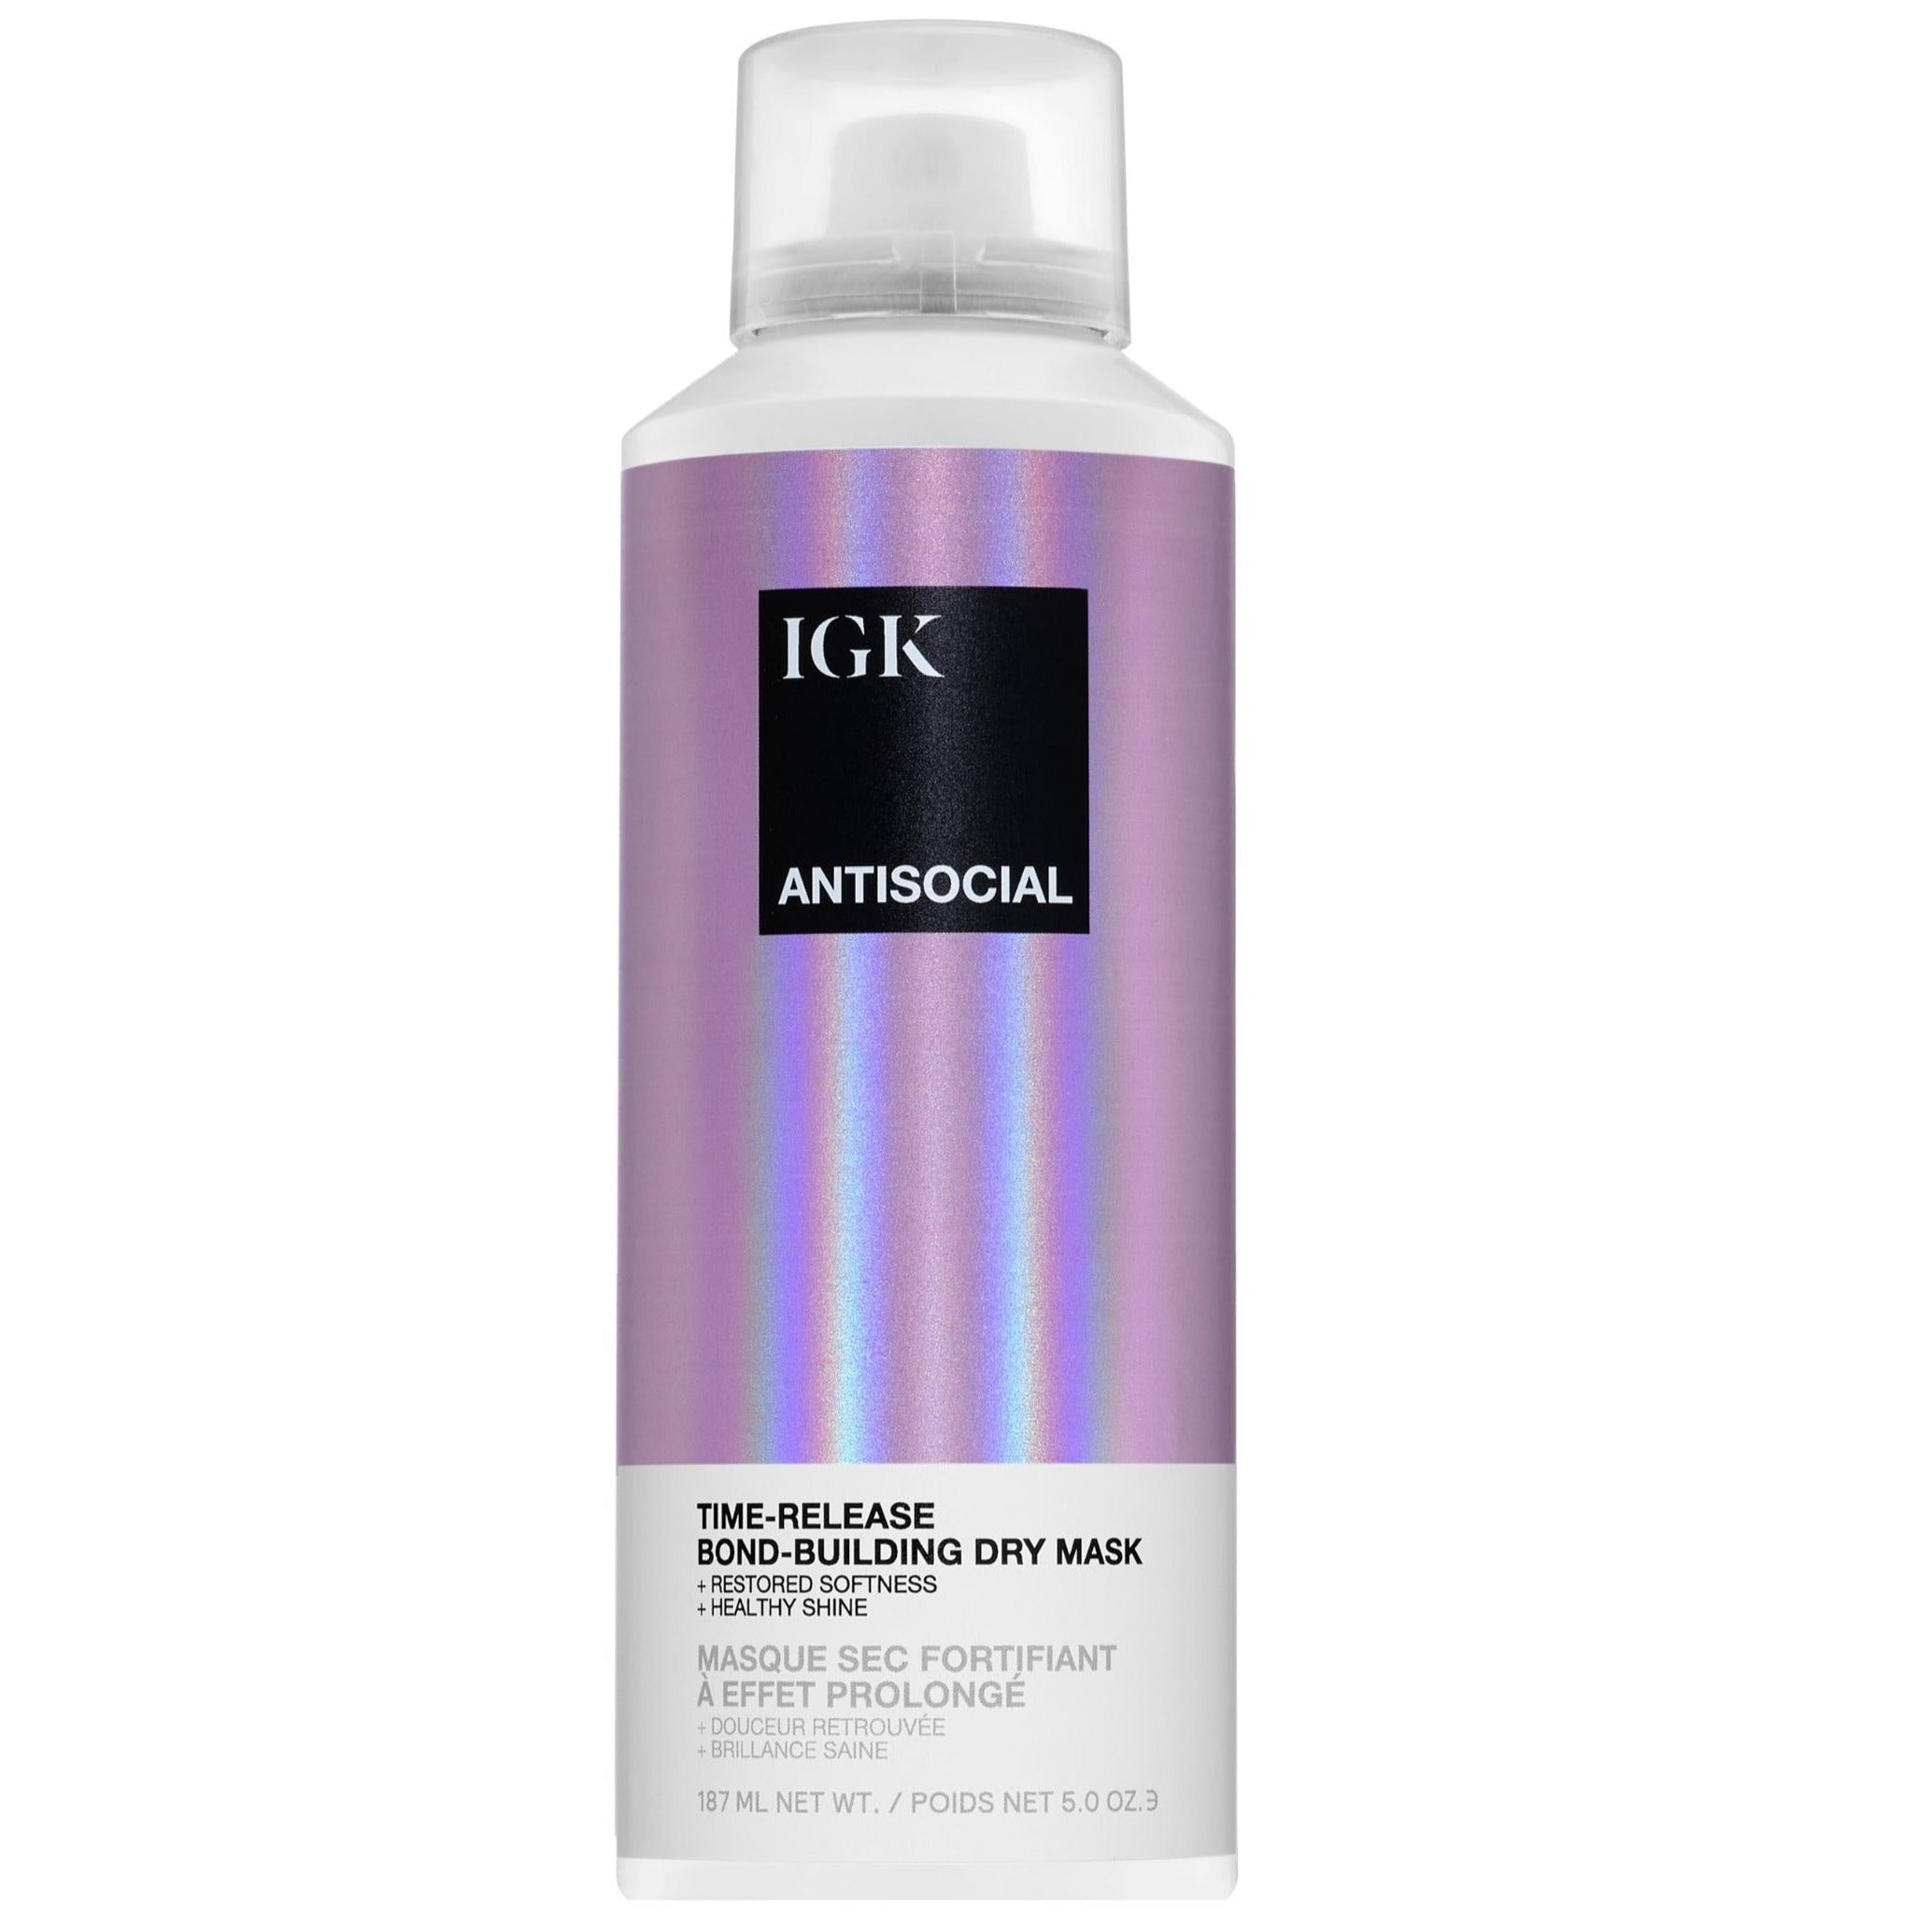 IGK Hair Antisocial Time-Release Bond-Building Dry Mask, 5 oz / 187 mL